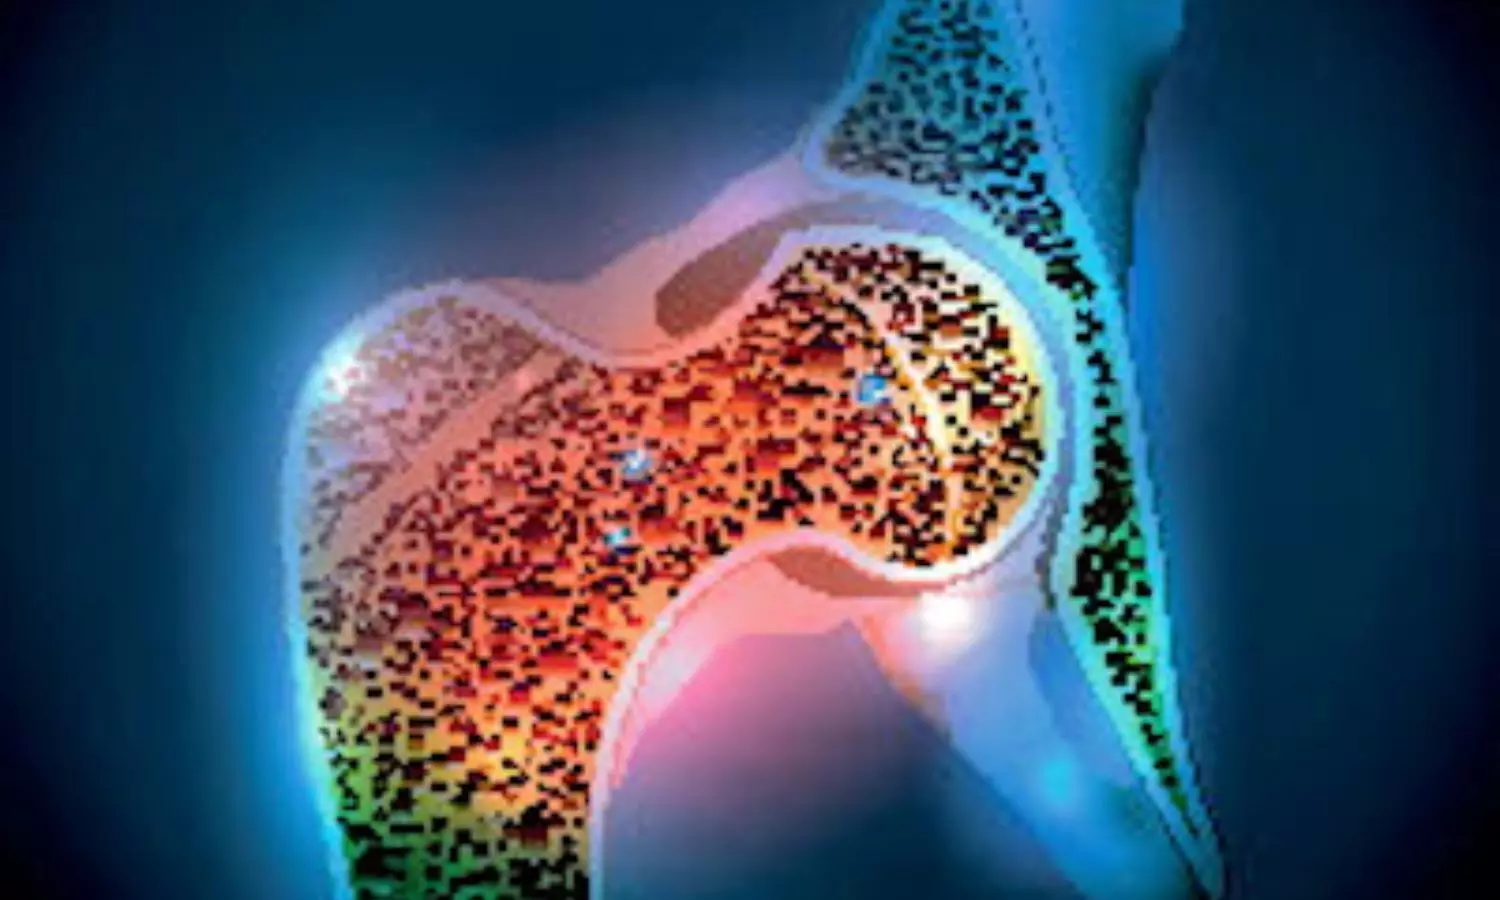 MRI useful for the assessment of bone health in postmenopausal women: Study